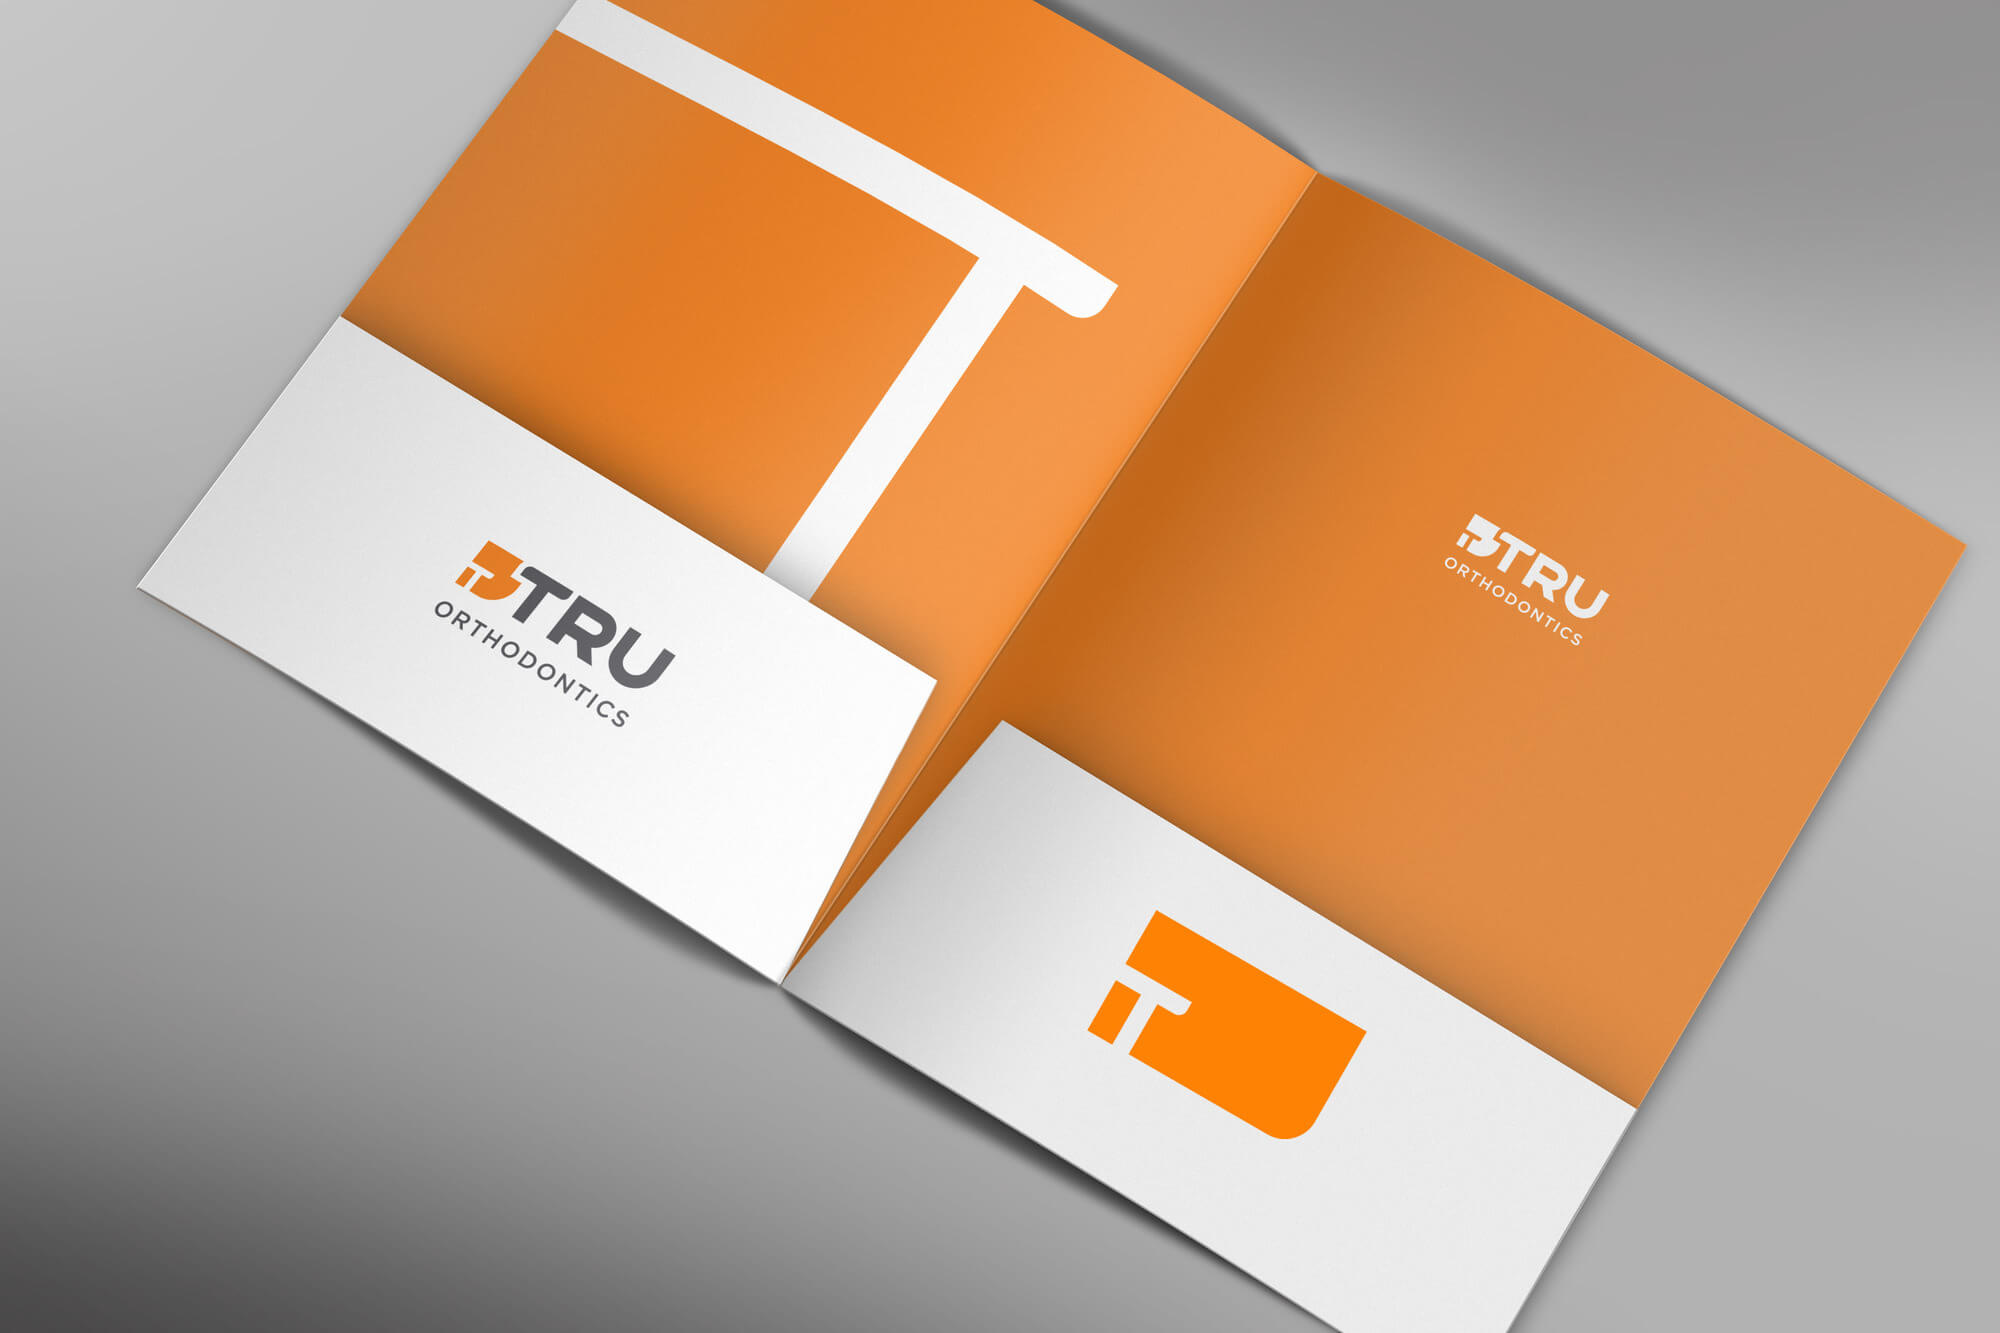 A presentation folder design for Tru Orthodontics